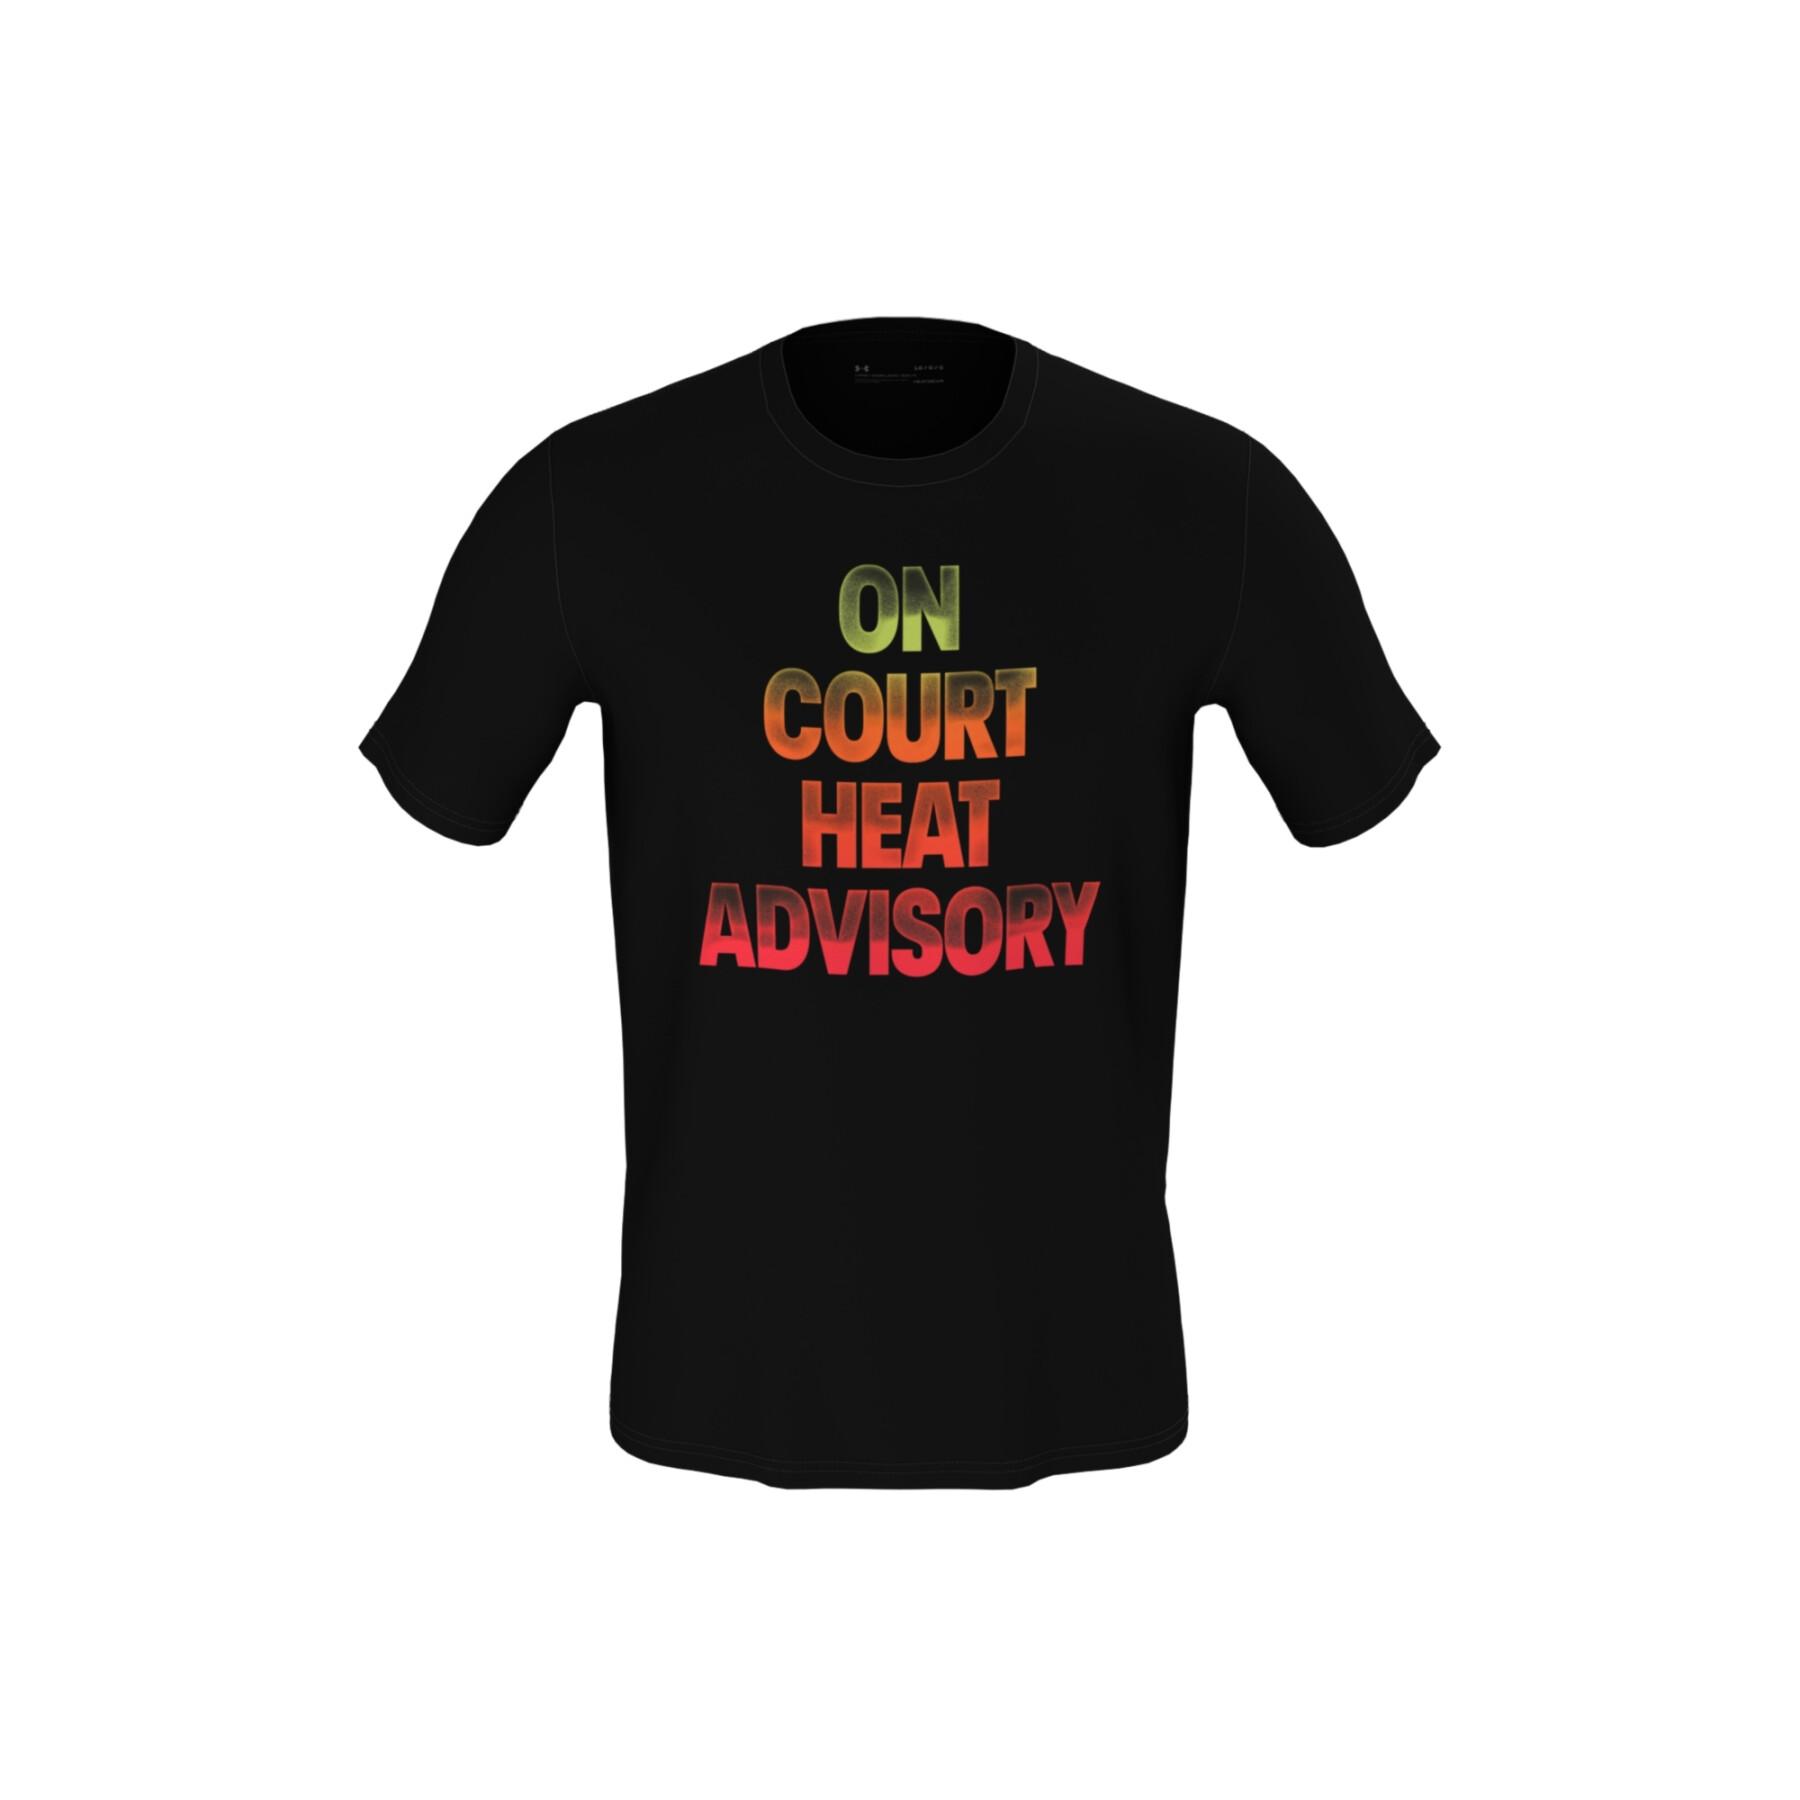 Camiseta Under Armour bball heat advisory